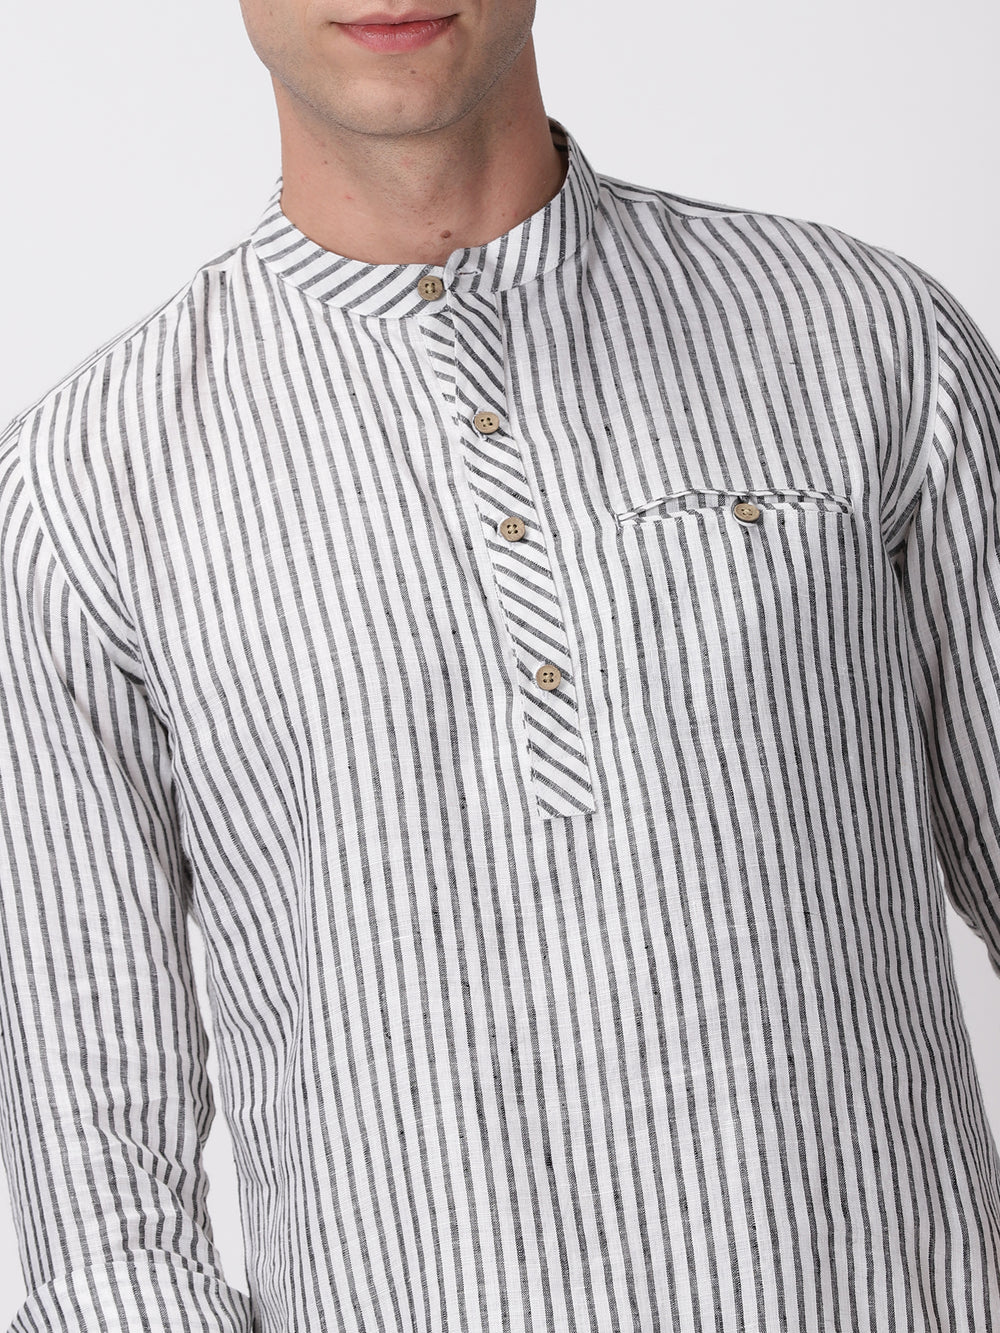 Zane - Pure Linen Striped Long Sleeve Shirt - Black & White